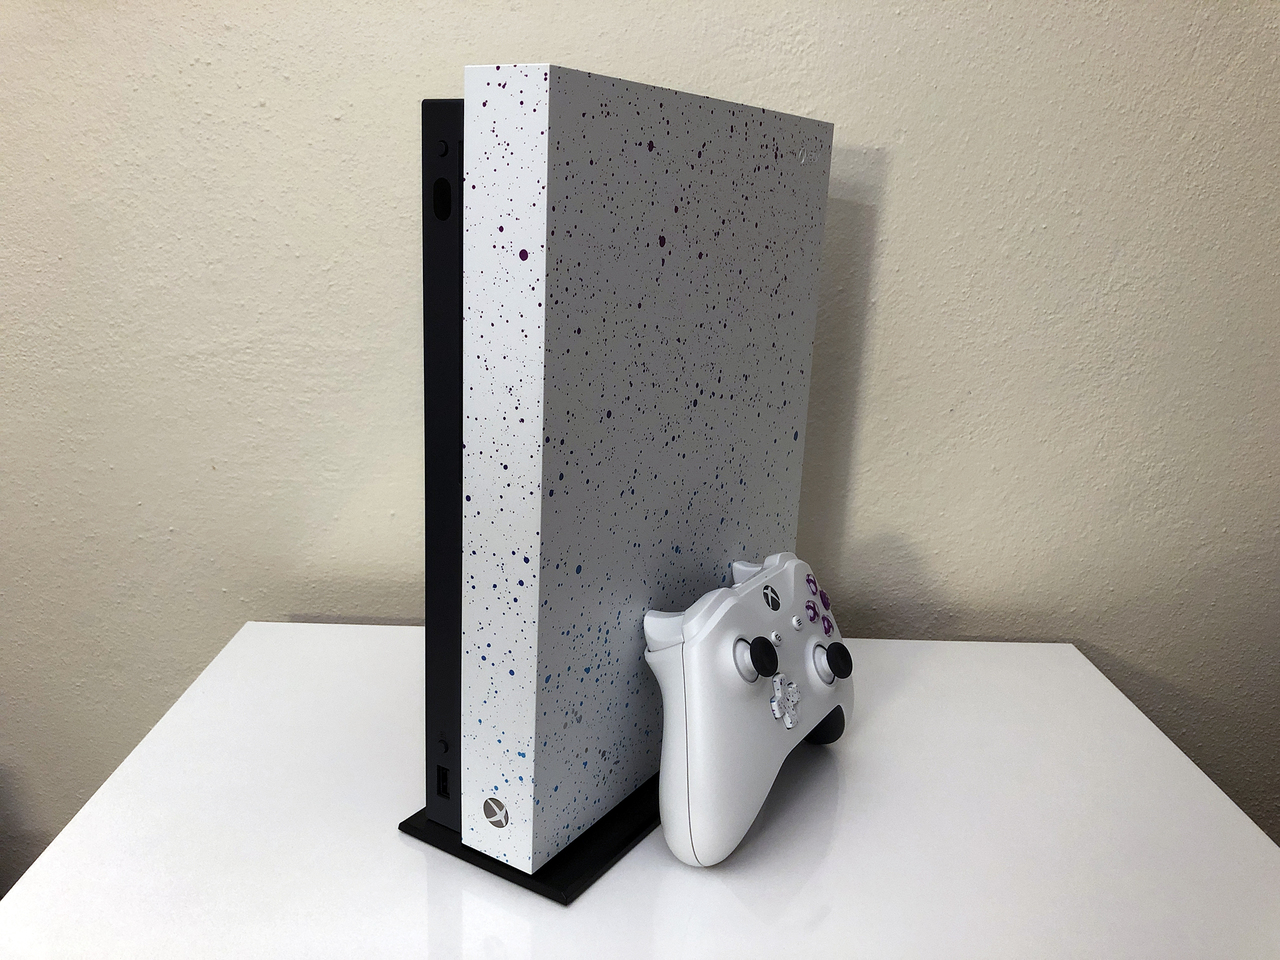 Satıldı | Xbox One X Hyperspace Special Edition - Vatan Faturalı